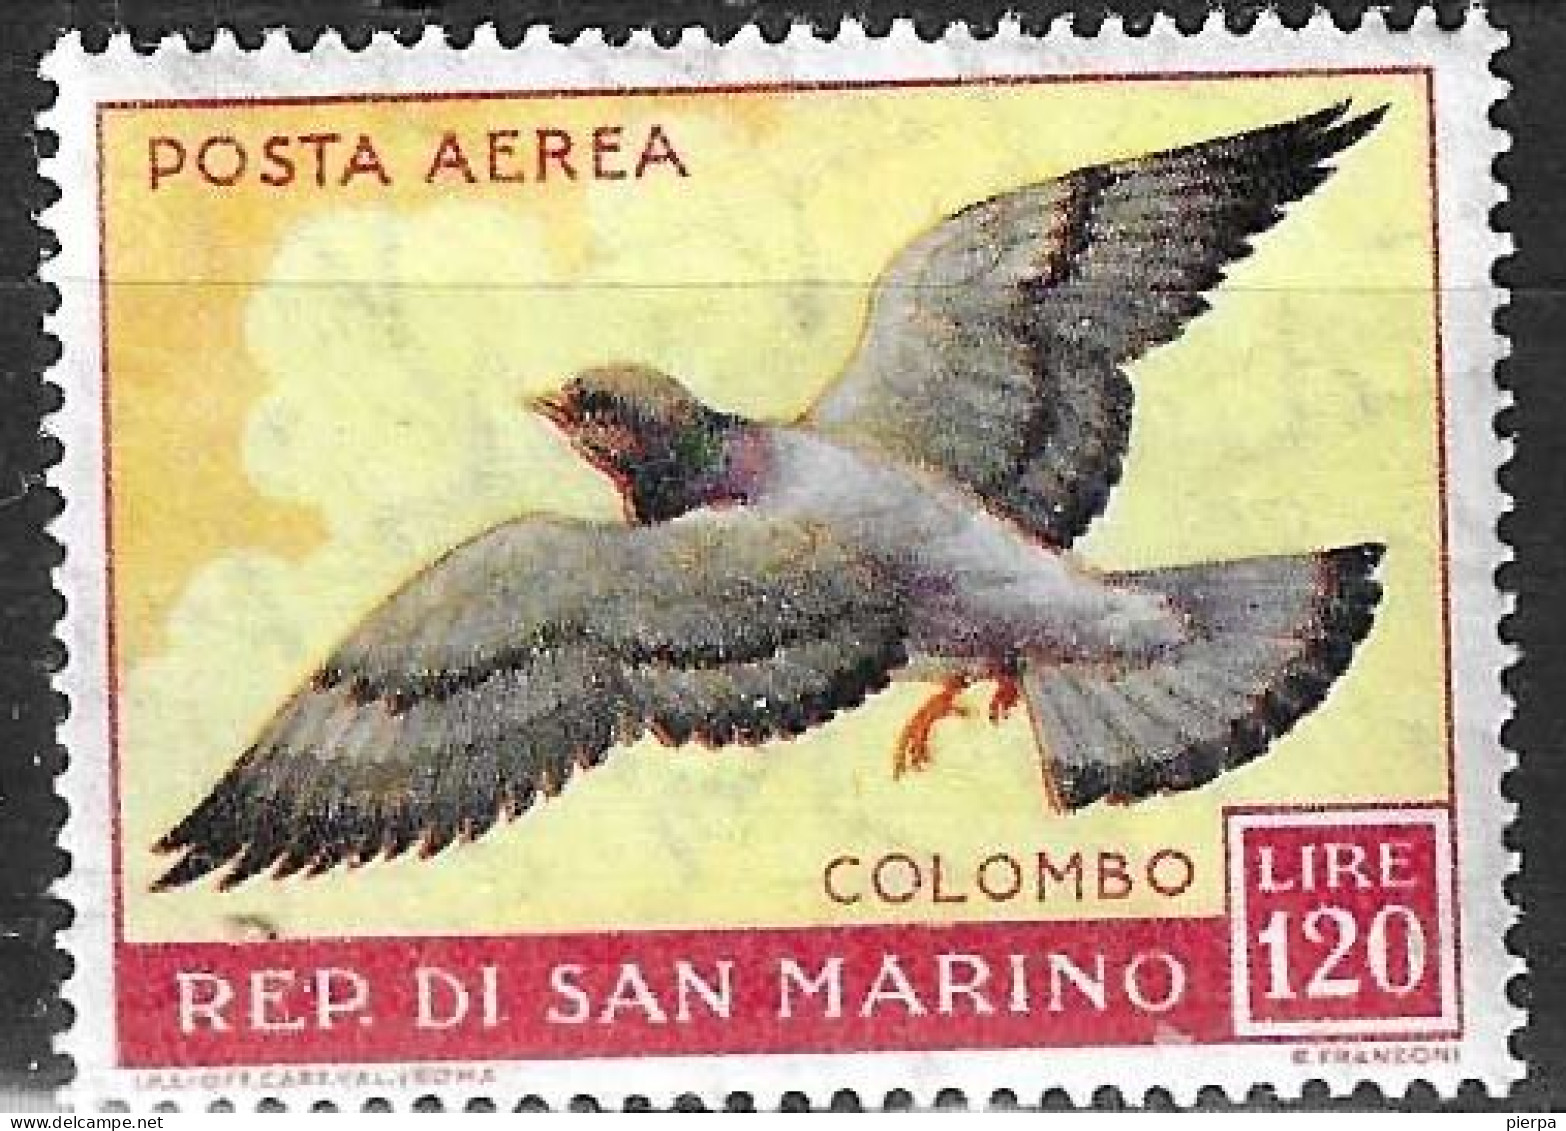 SAN MARINO -1959 - P. AEREA - COLOMBO - LIRE 120- NUOVO -MNH** ( YVERT AV 114- MICHEL 609- SS A 125) - Posta Aerea